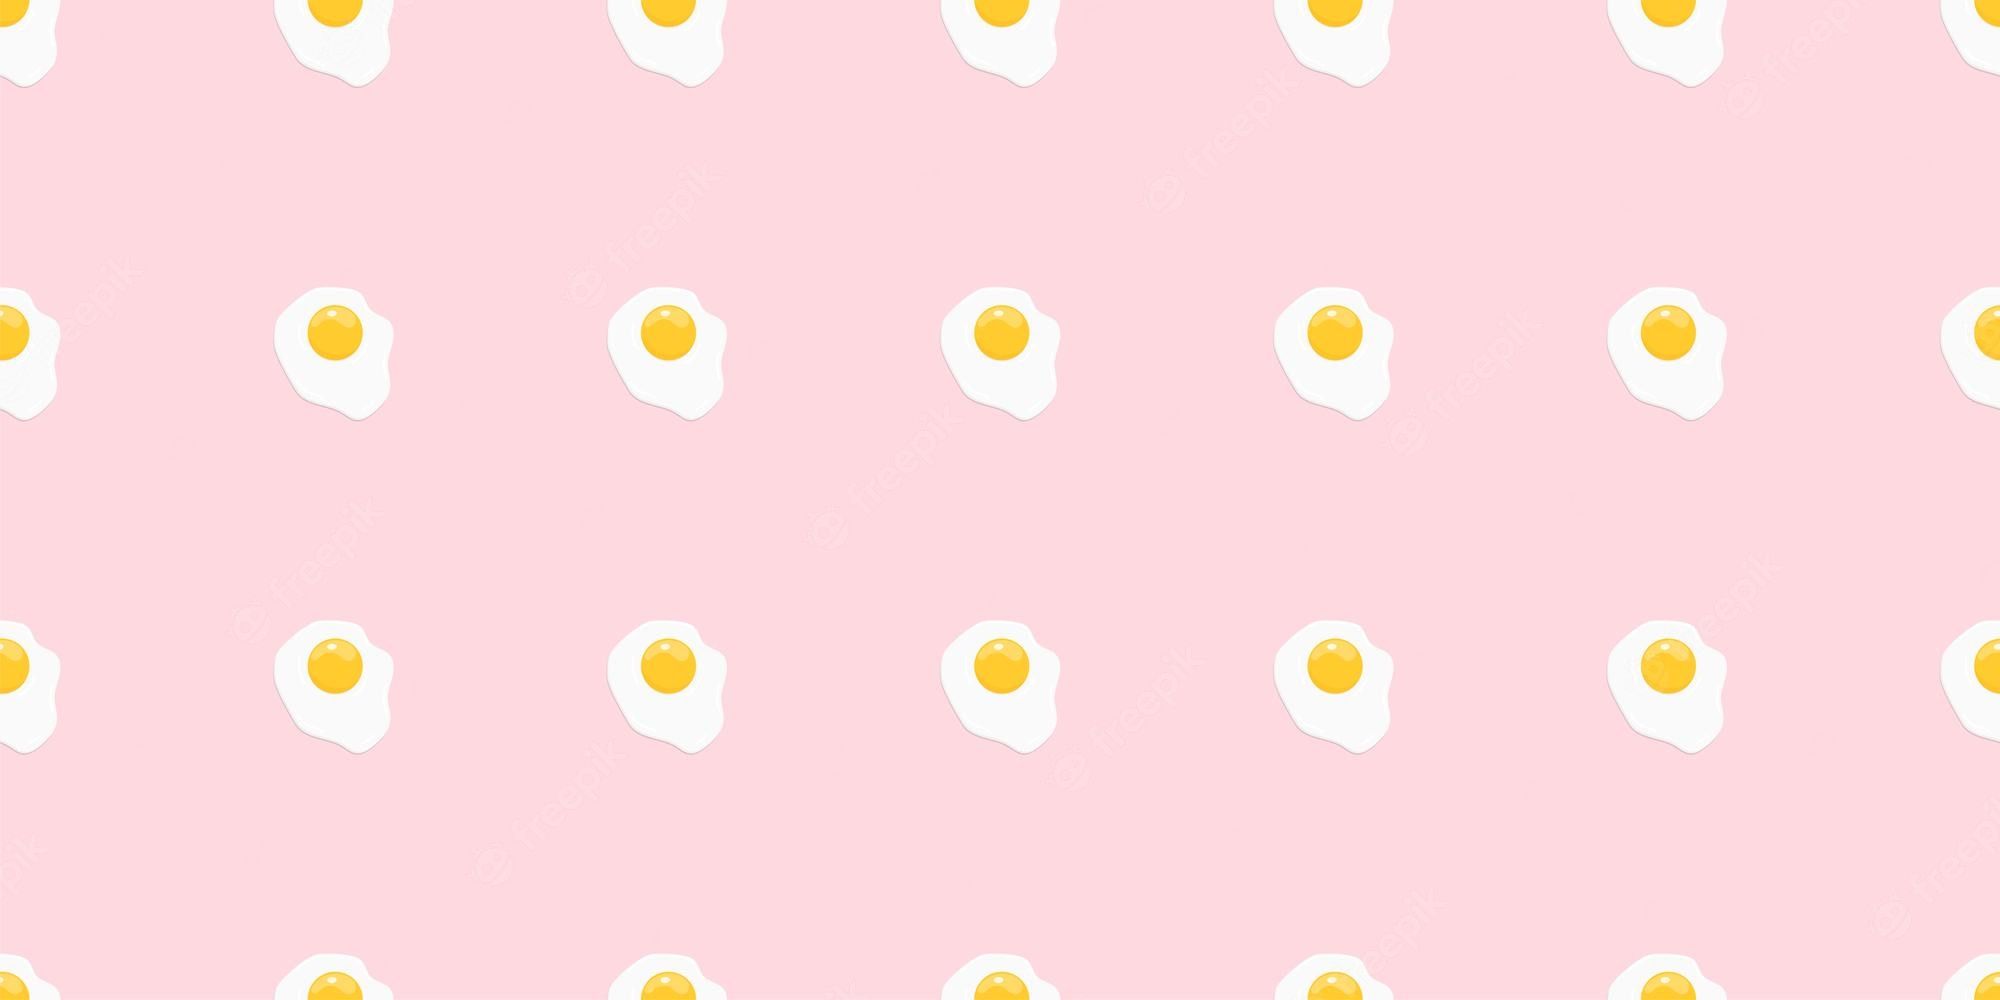 Egg wallpaper Vectors & Illustrations for Free Download